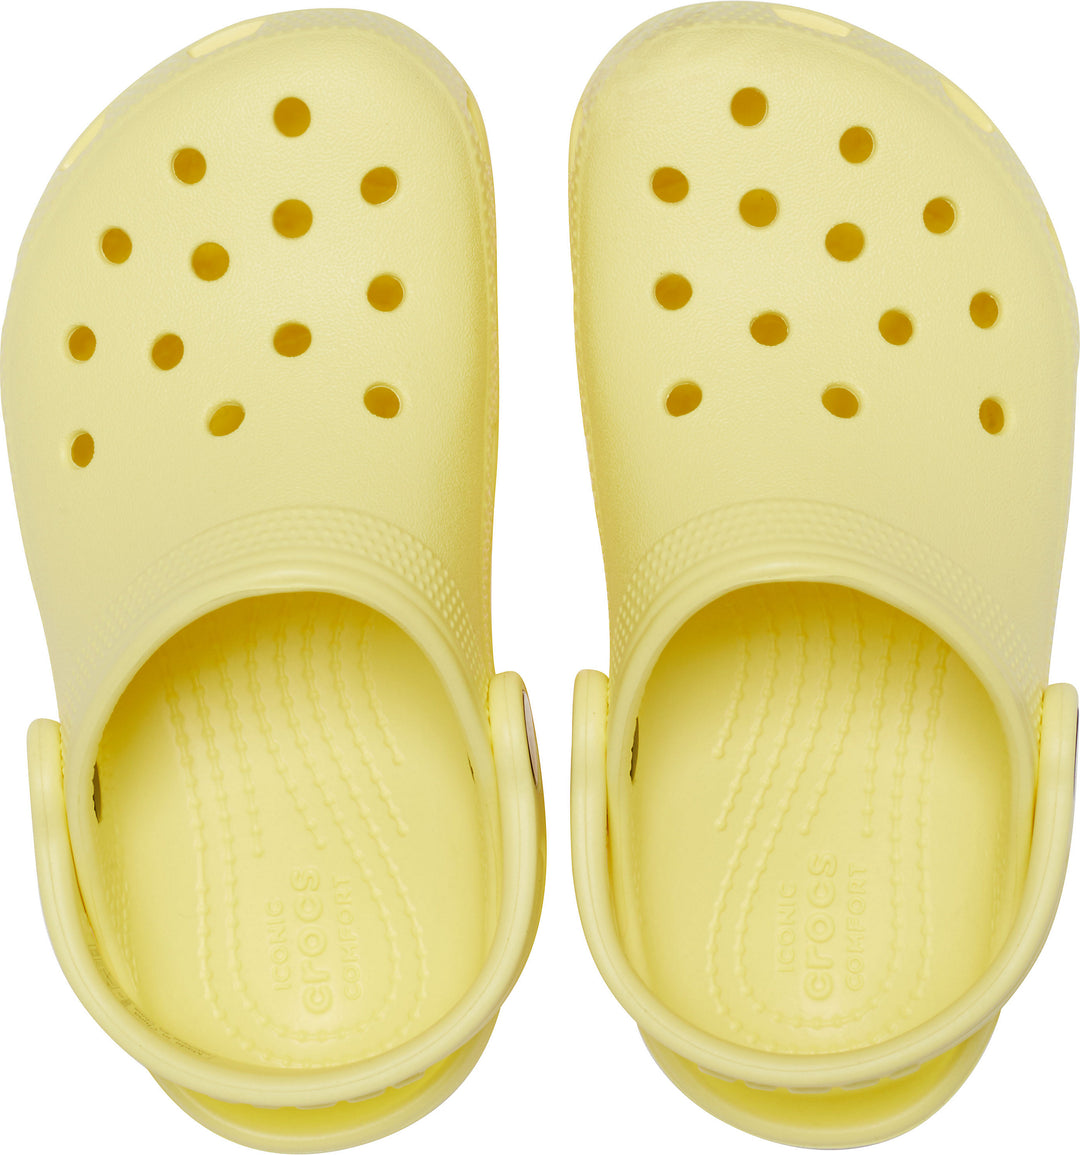 Crocs Kids Classic Clogs In Banana